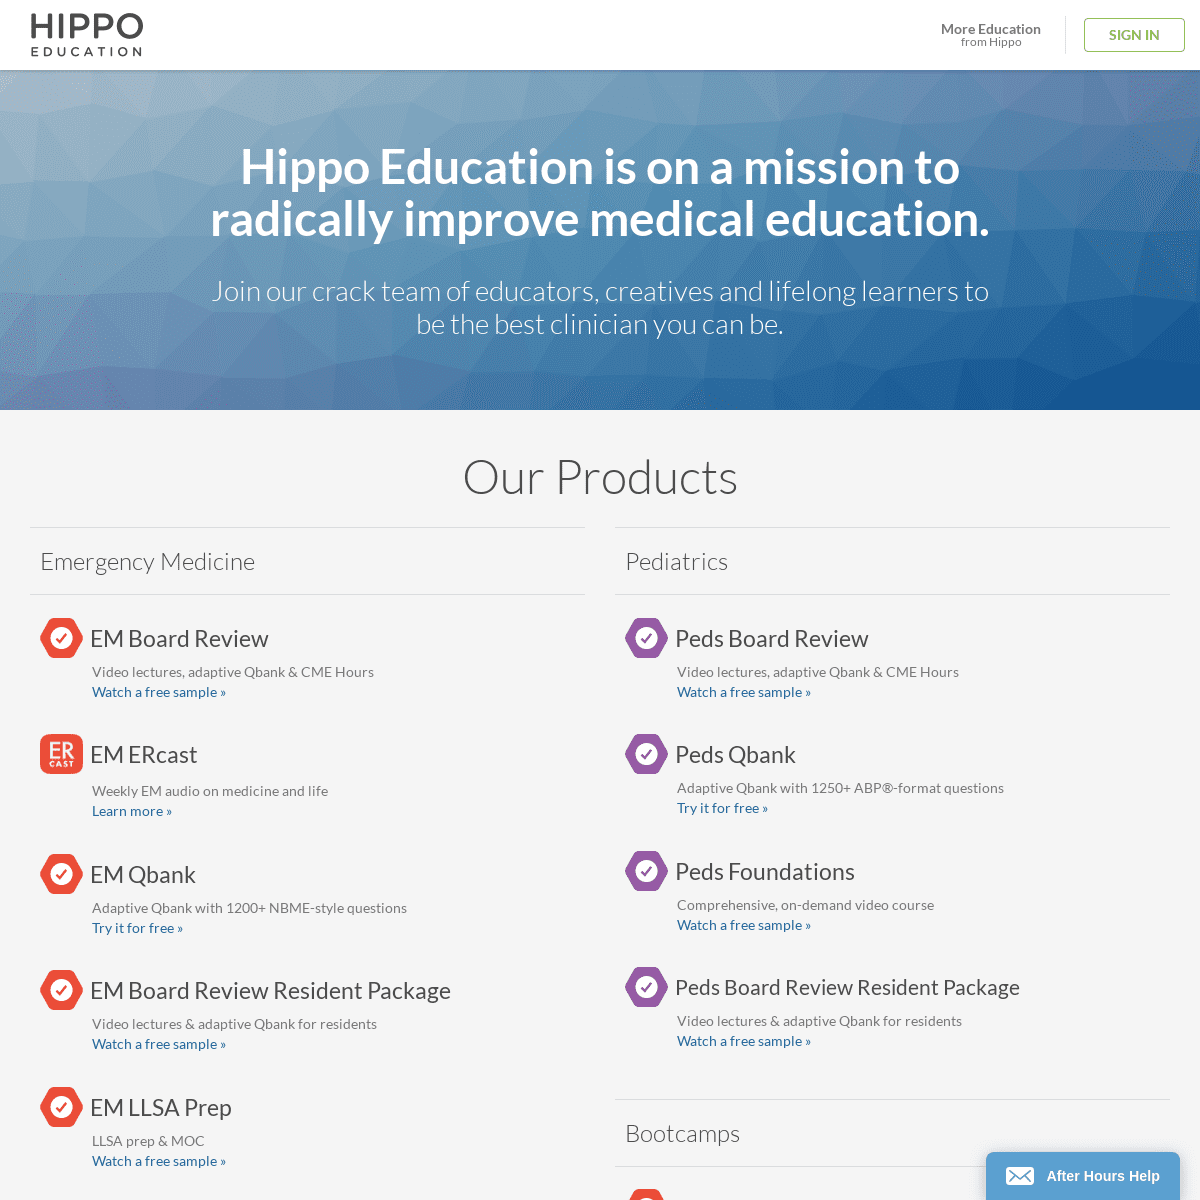 A complete backup of hippoed.com